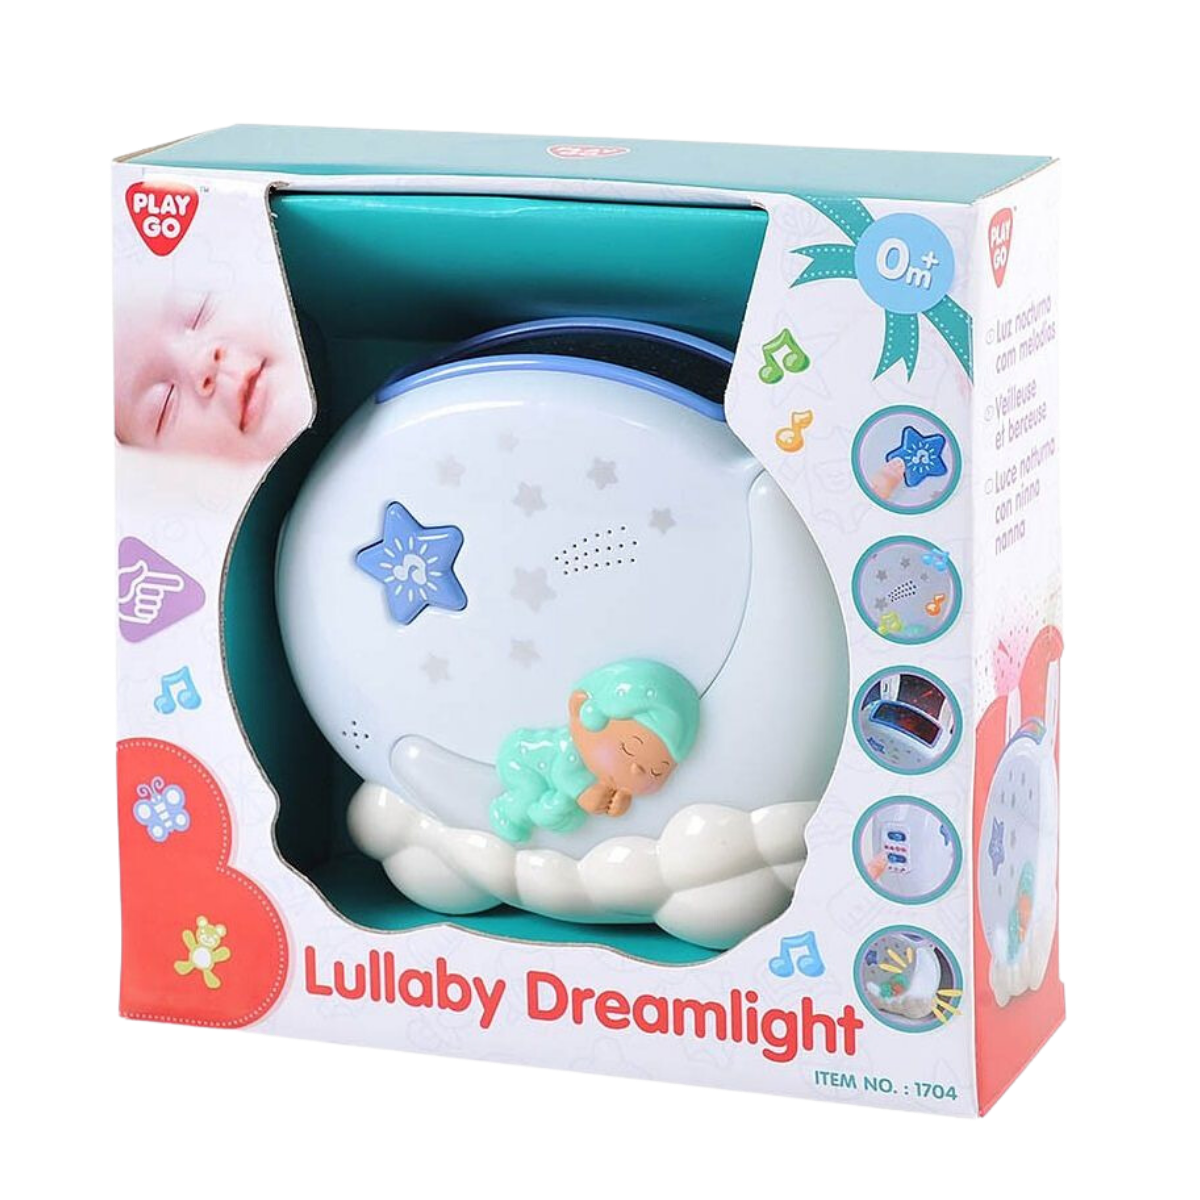 Lullaby Dreamlight